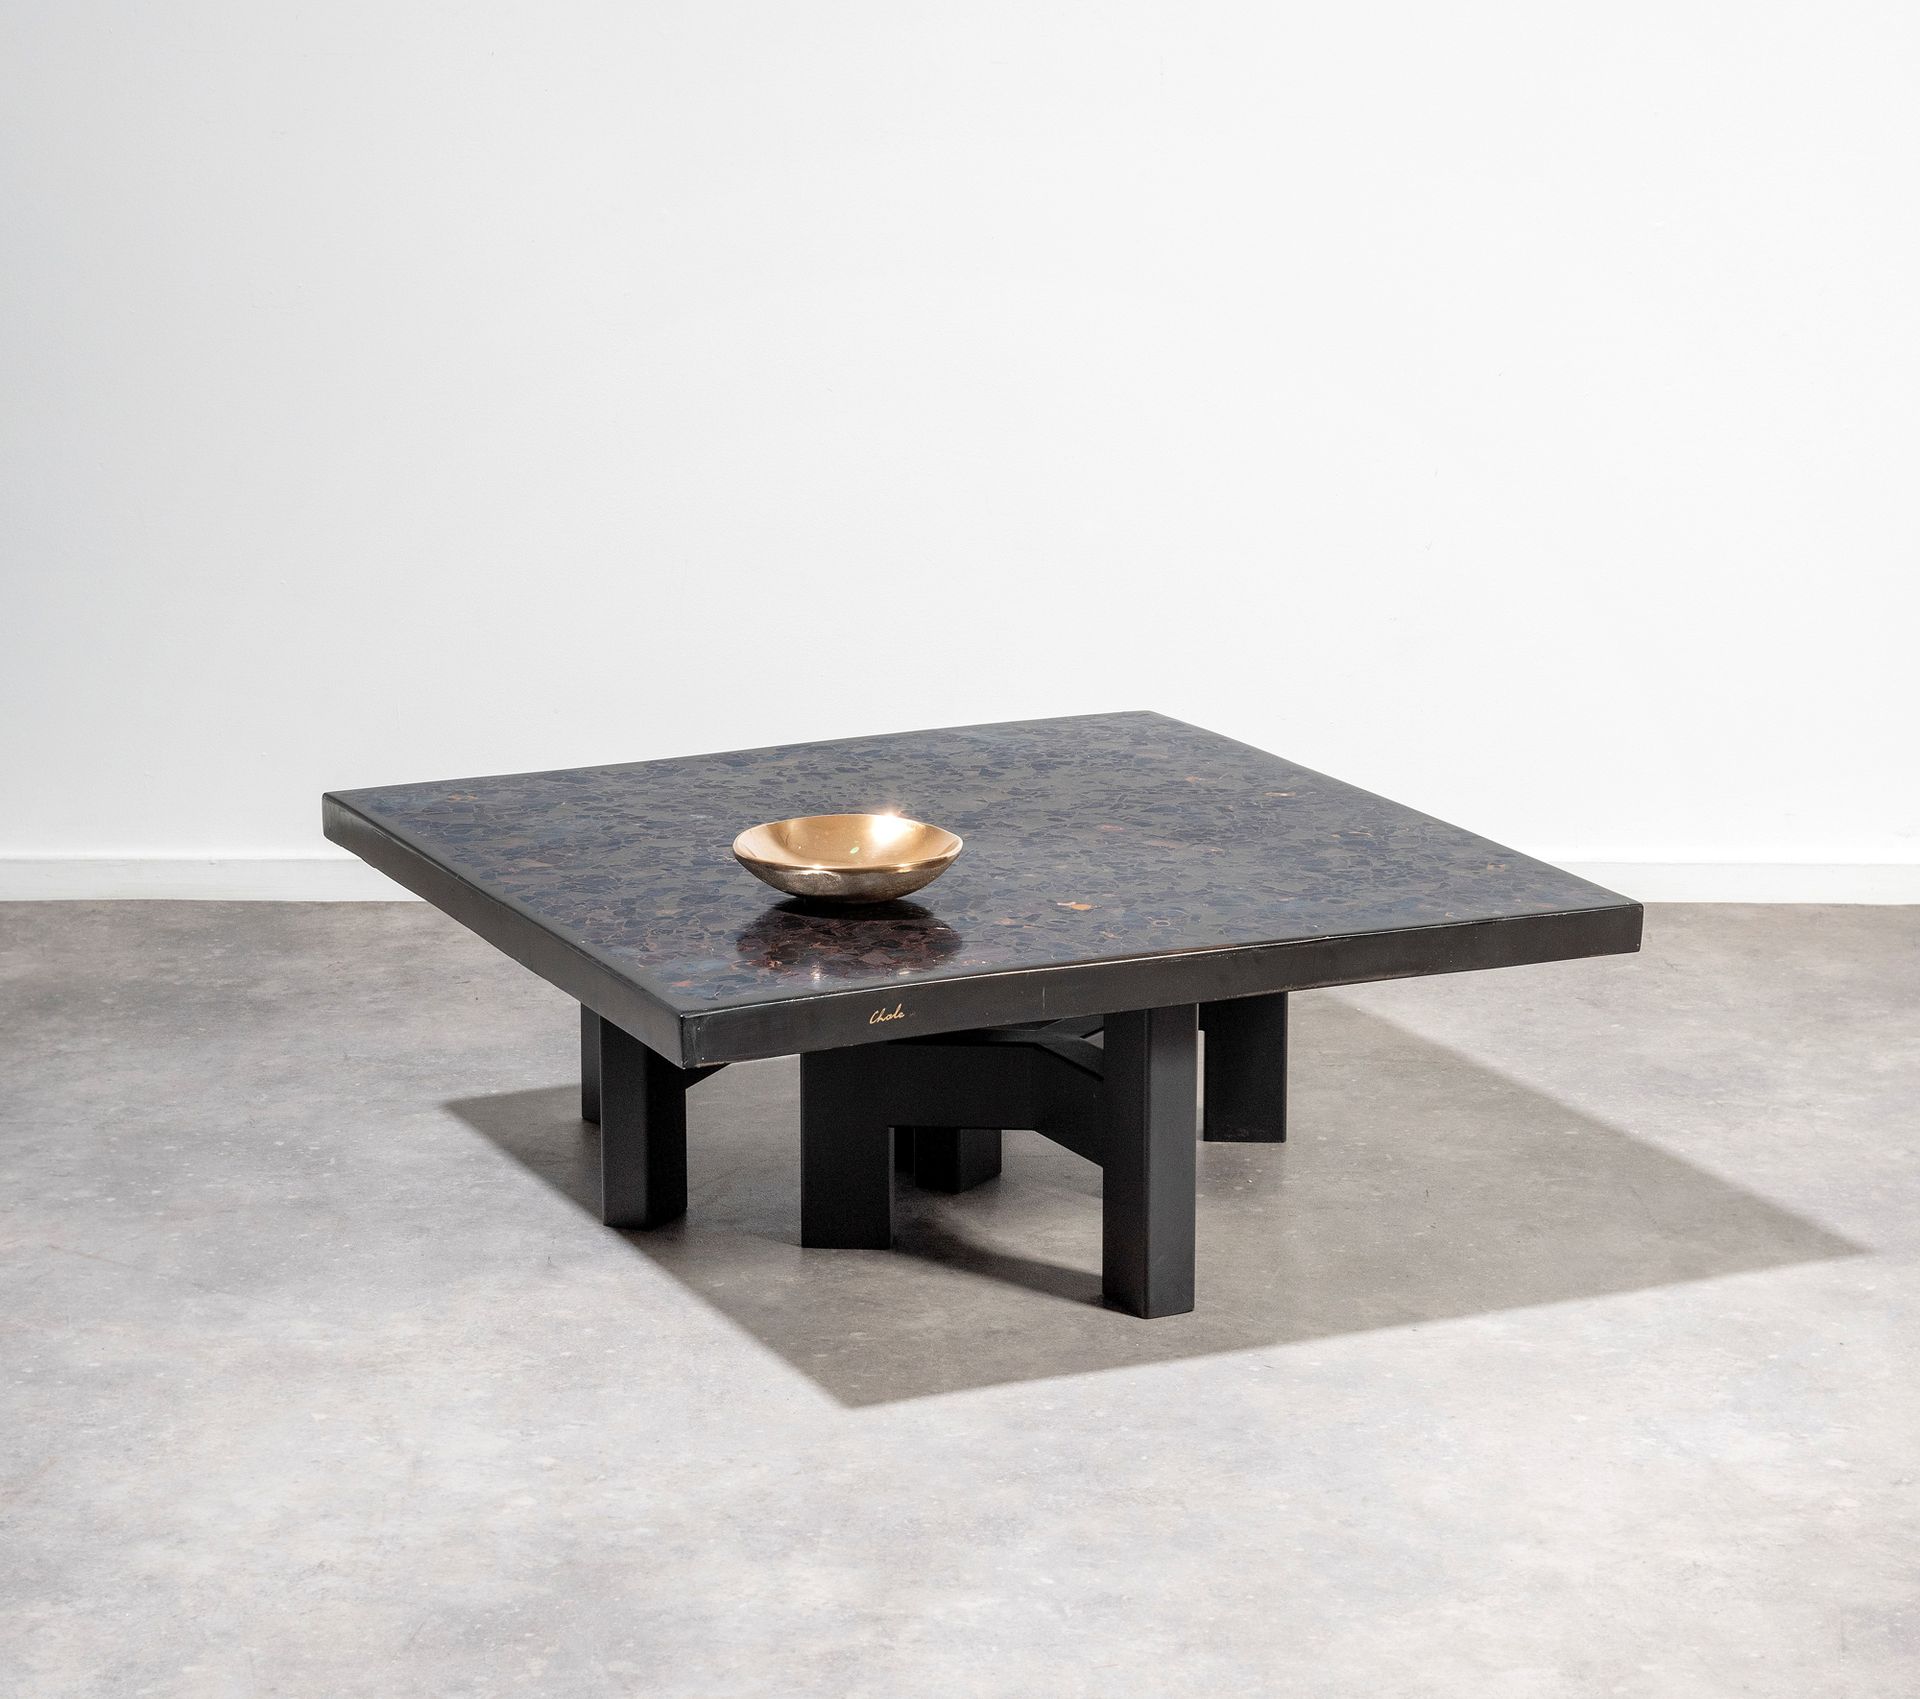 Ado CHALE (né en 1928) 咖啡桌
黑色树脂和赤铁矿马赛克的桌面，放在三个黑色漆面钢的三脚架腿上。
签名由一颗锡兰红宝石圈出的黄金加强。
将向&hellip;